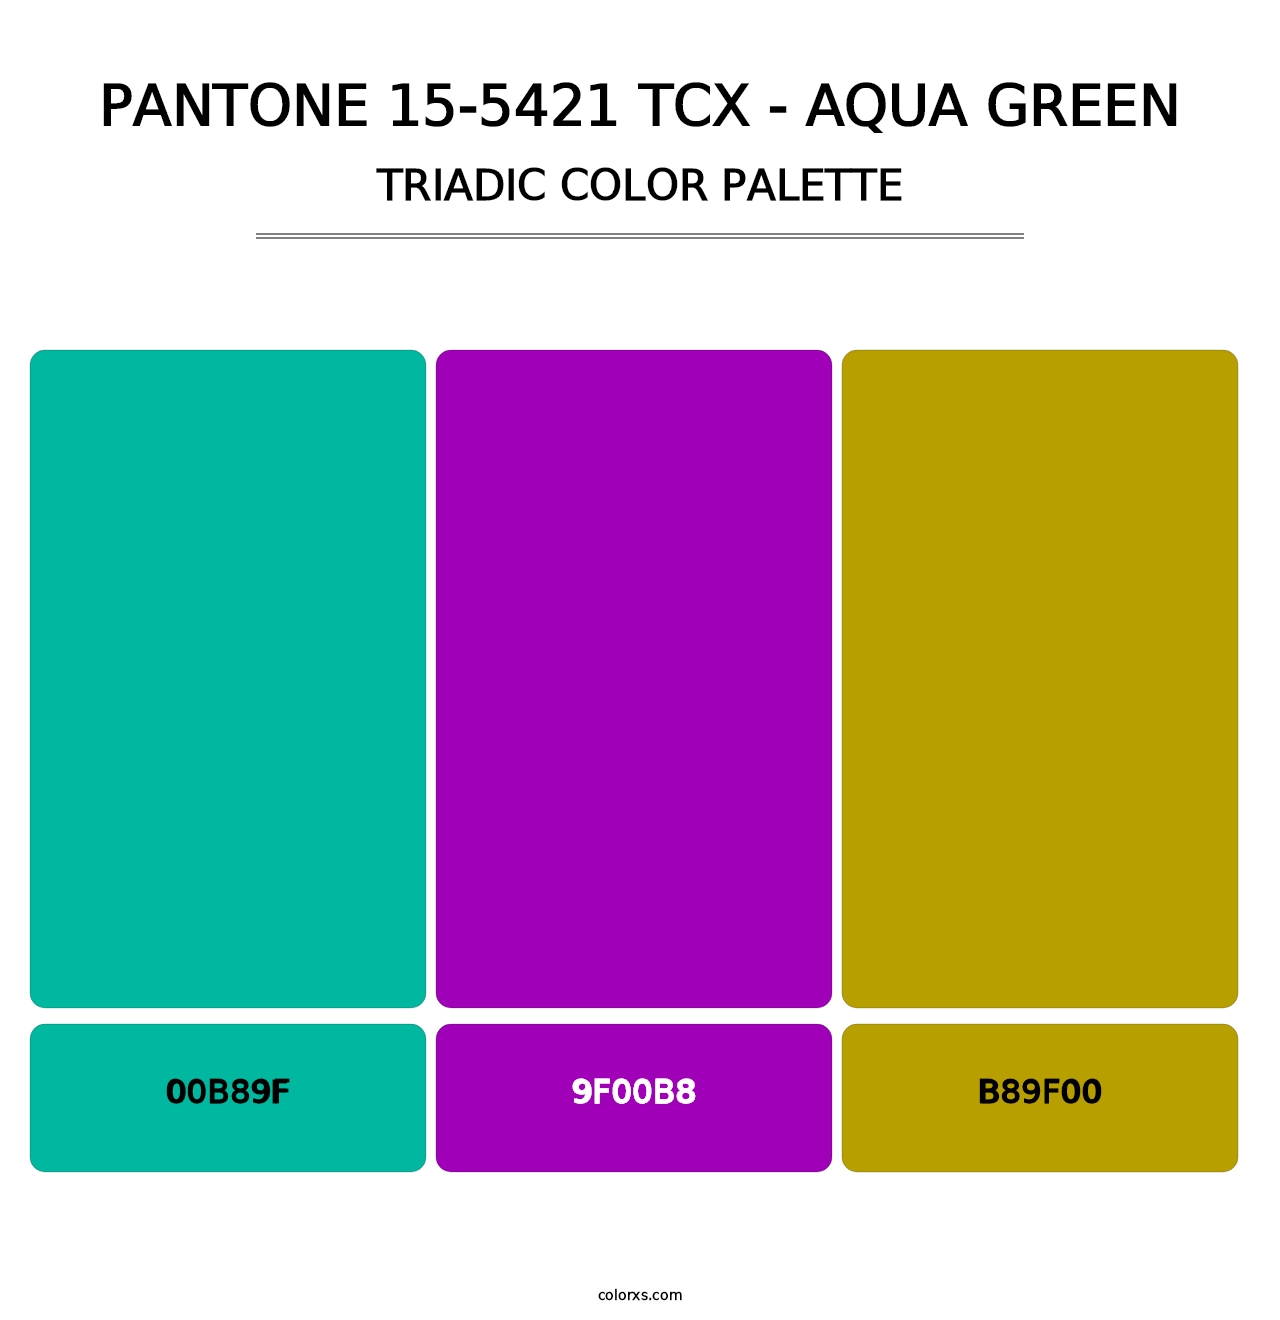 PANTONE 15-5421 TCX - Aqua Green - Triadic Color Palette